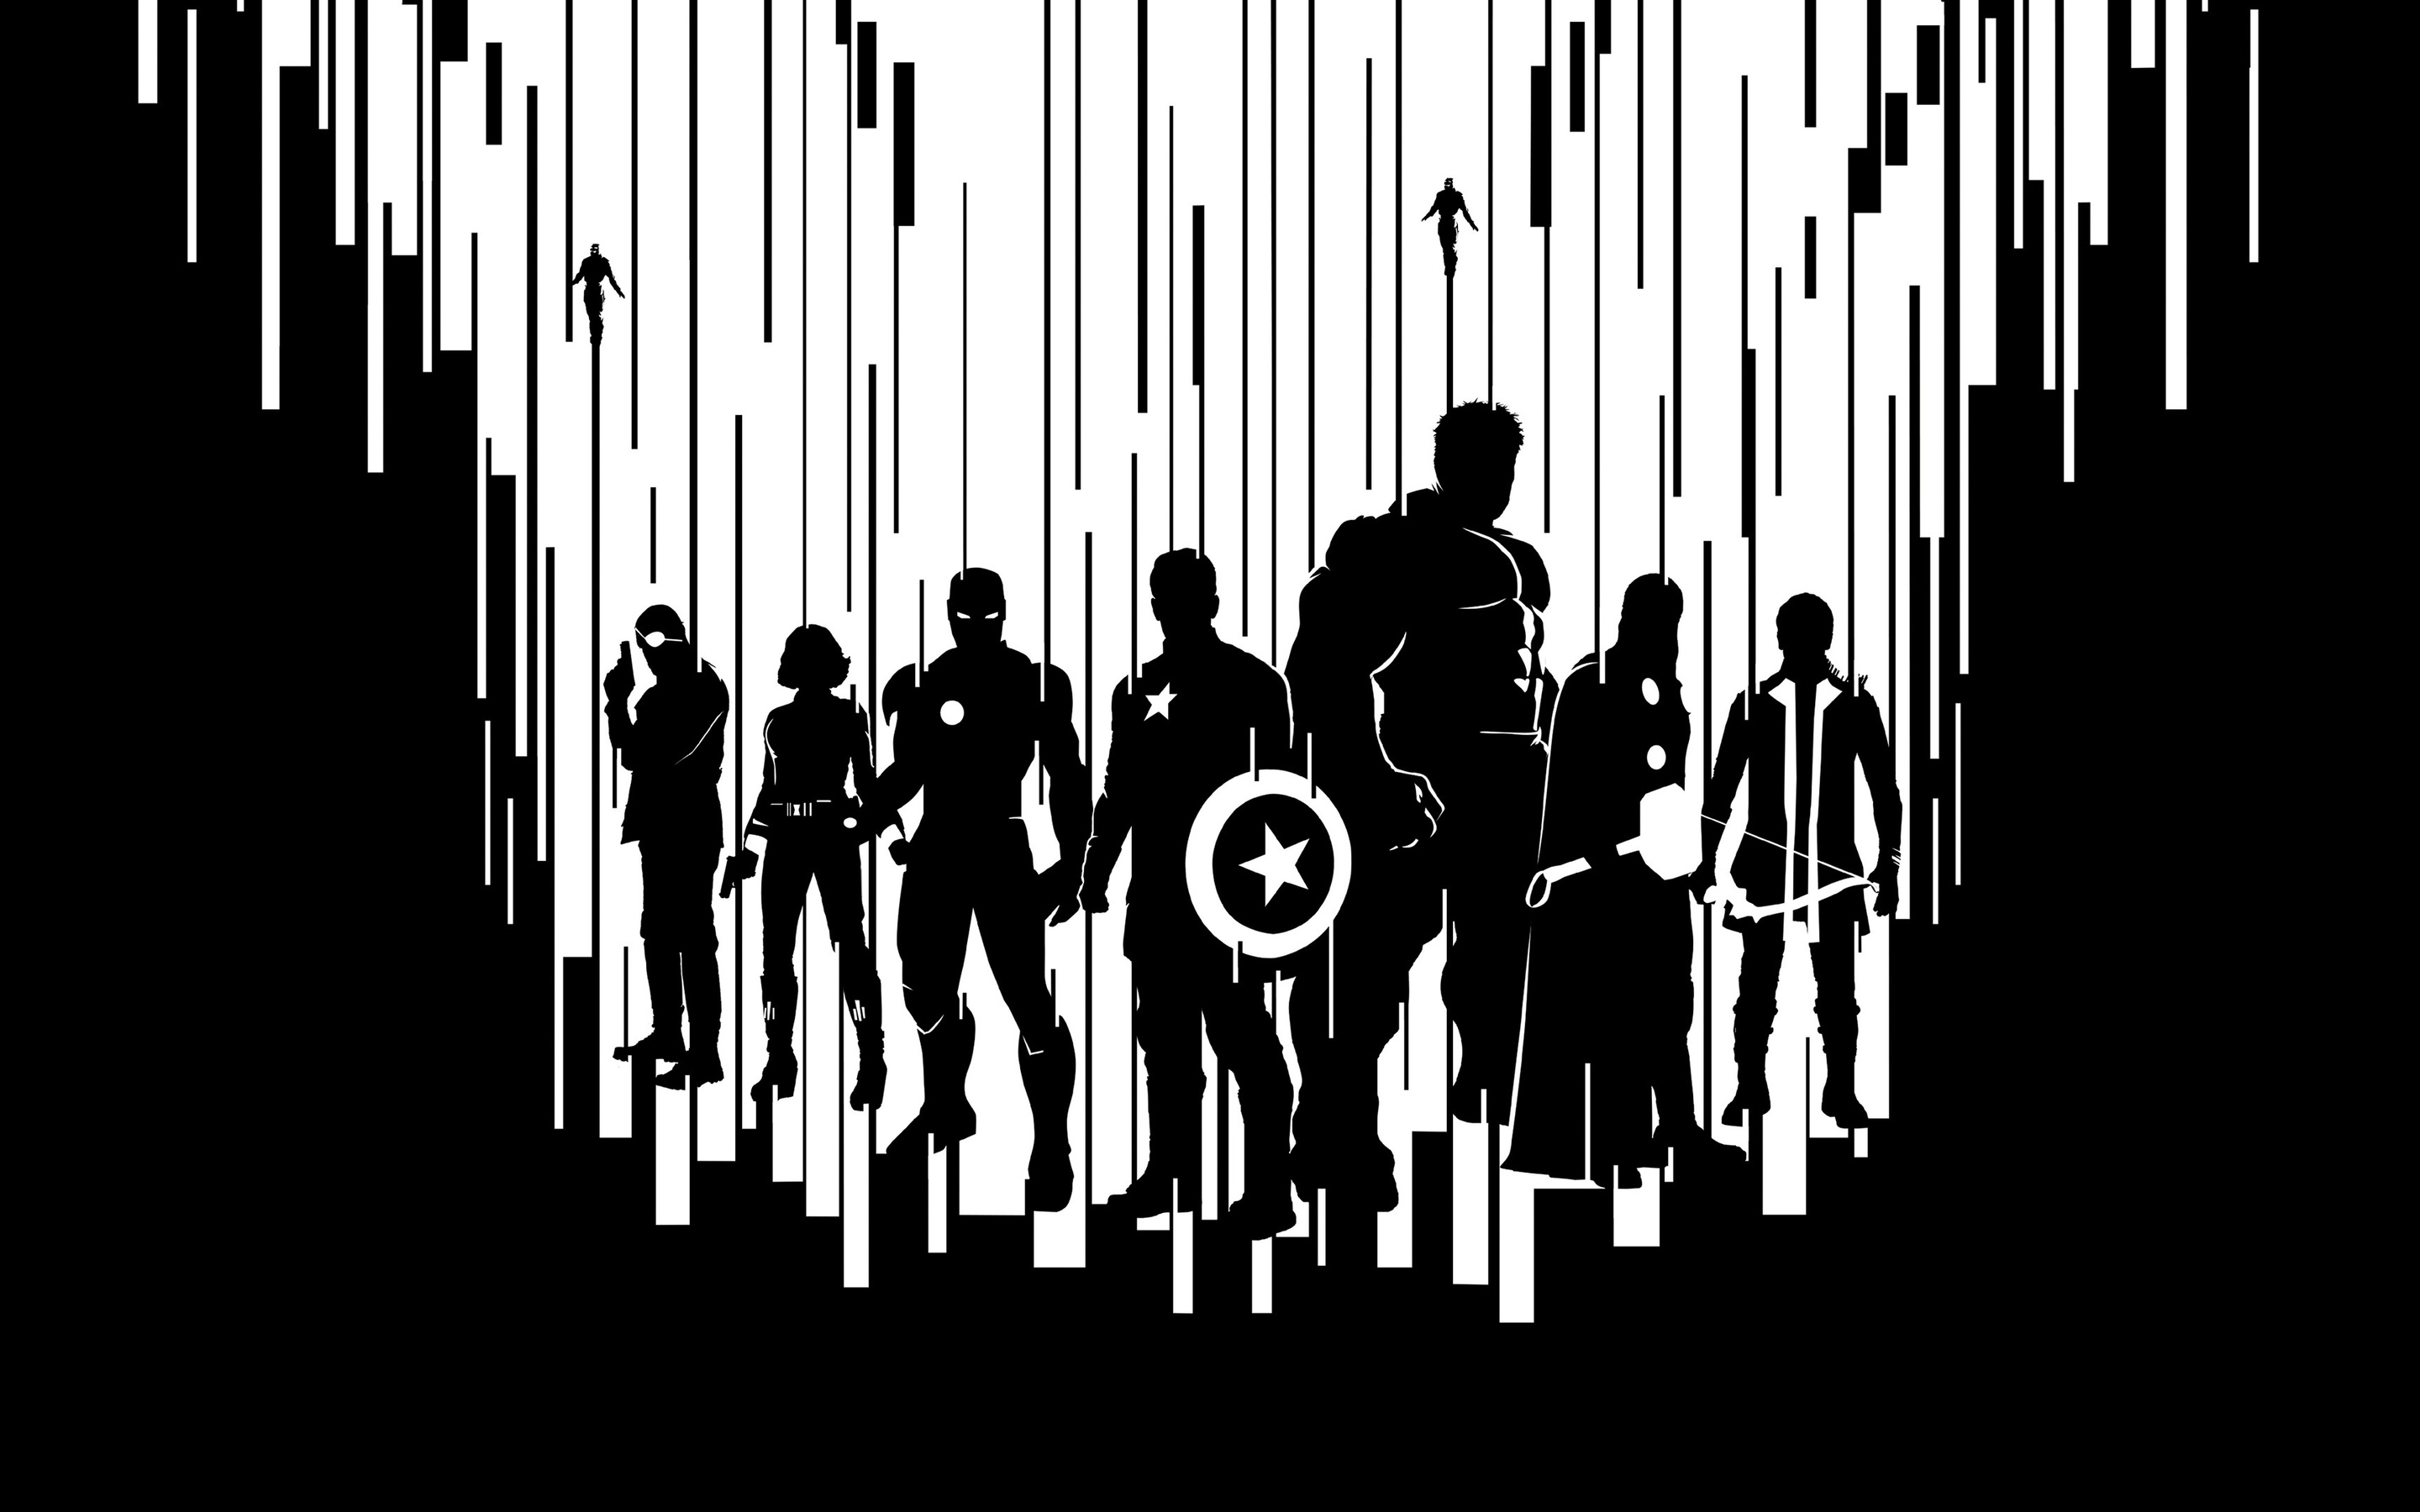 Avengers 2 2015 for 2880 x 1800 Retina Display resolution